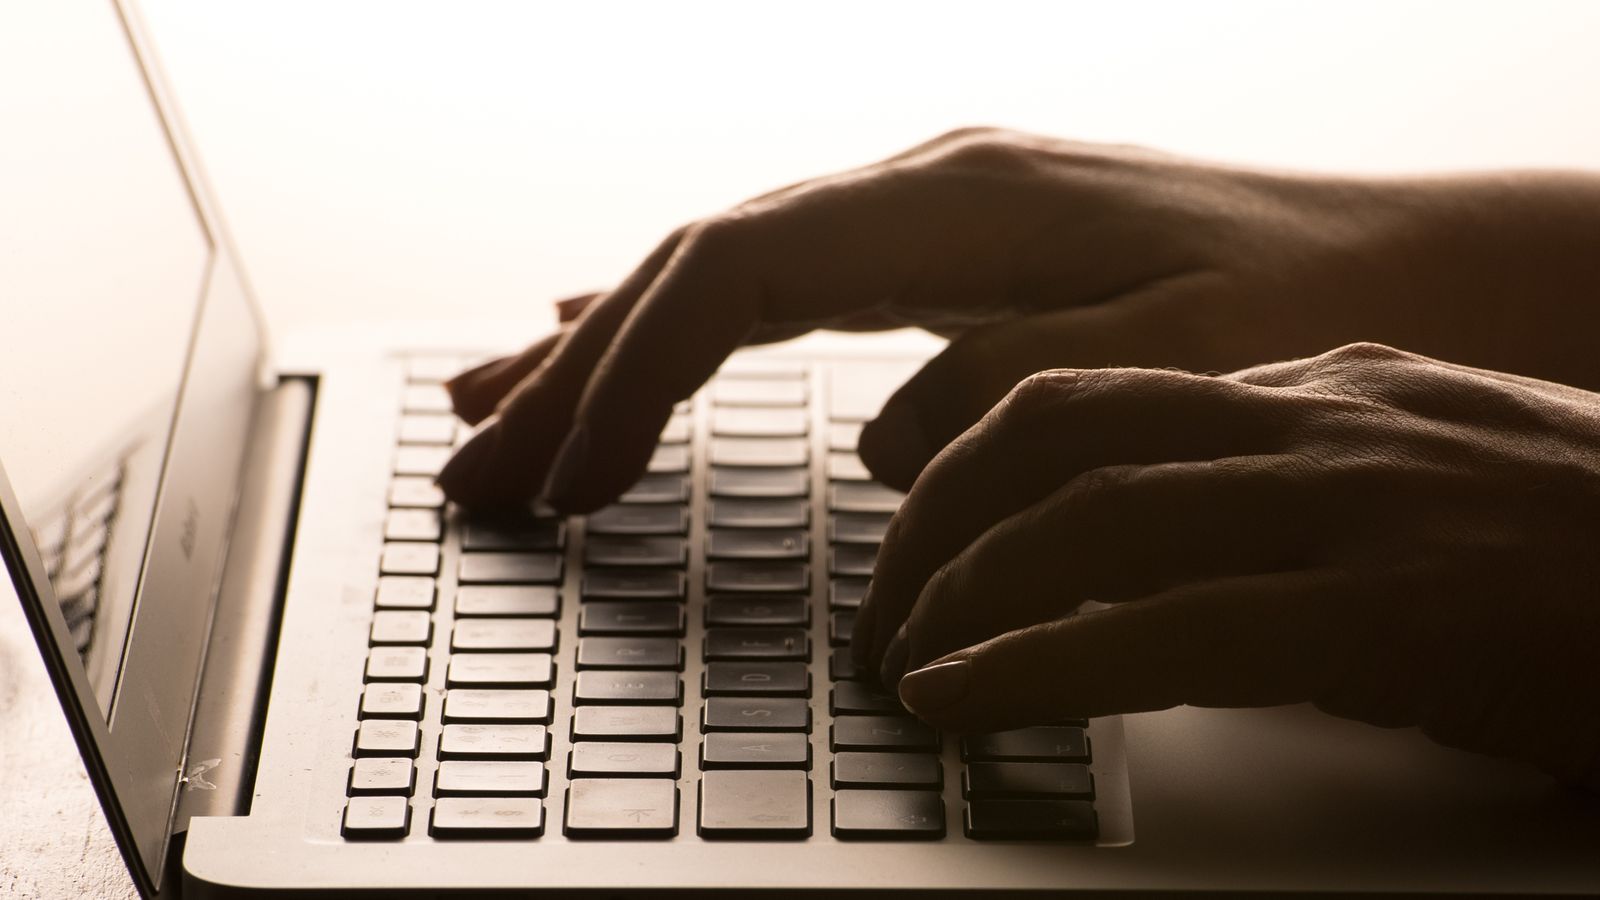 NHS cyber attack: Sensitive data stolen from blood test provider by criminal group 'published online'